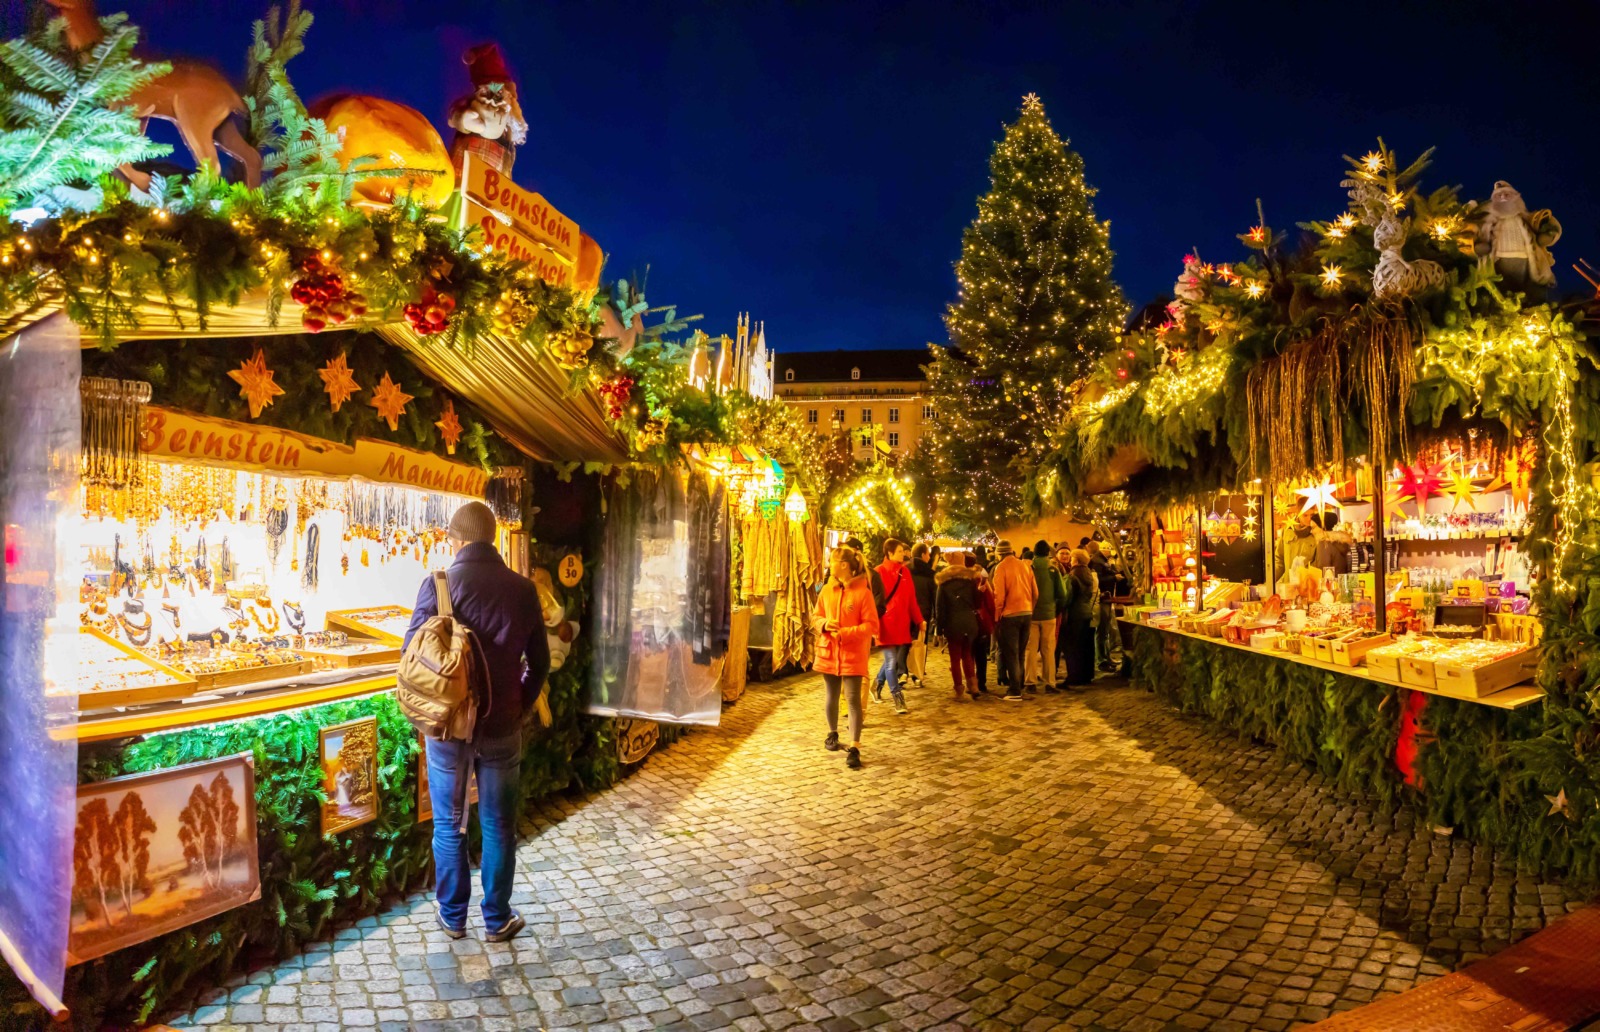 The Striezelmarkt in Dresden, one of the most beautiful Christmas markets in Germany. Photo by tdyuvbanova via Twenty20